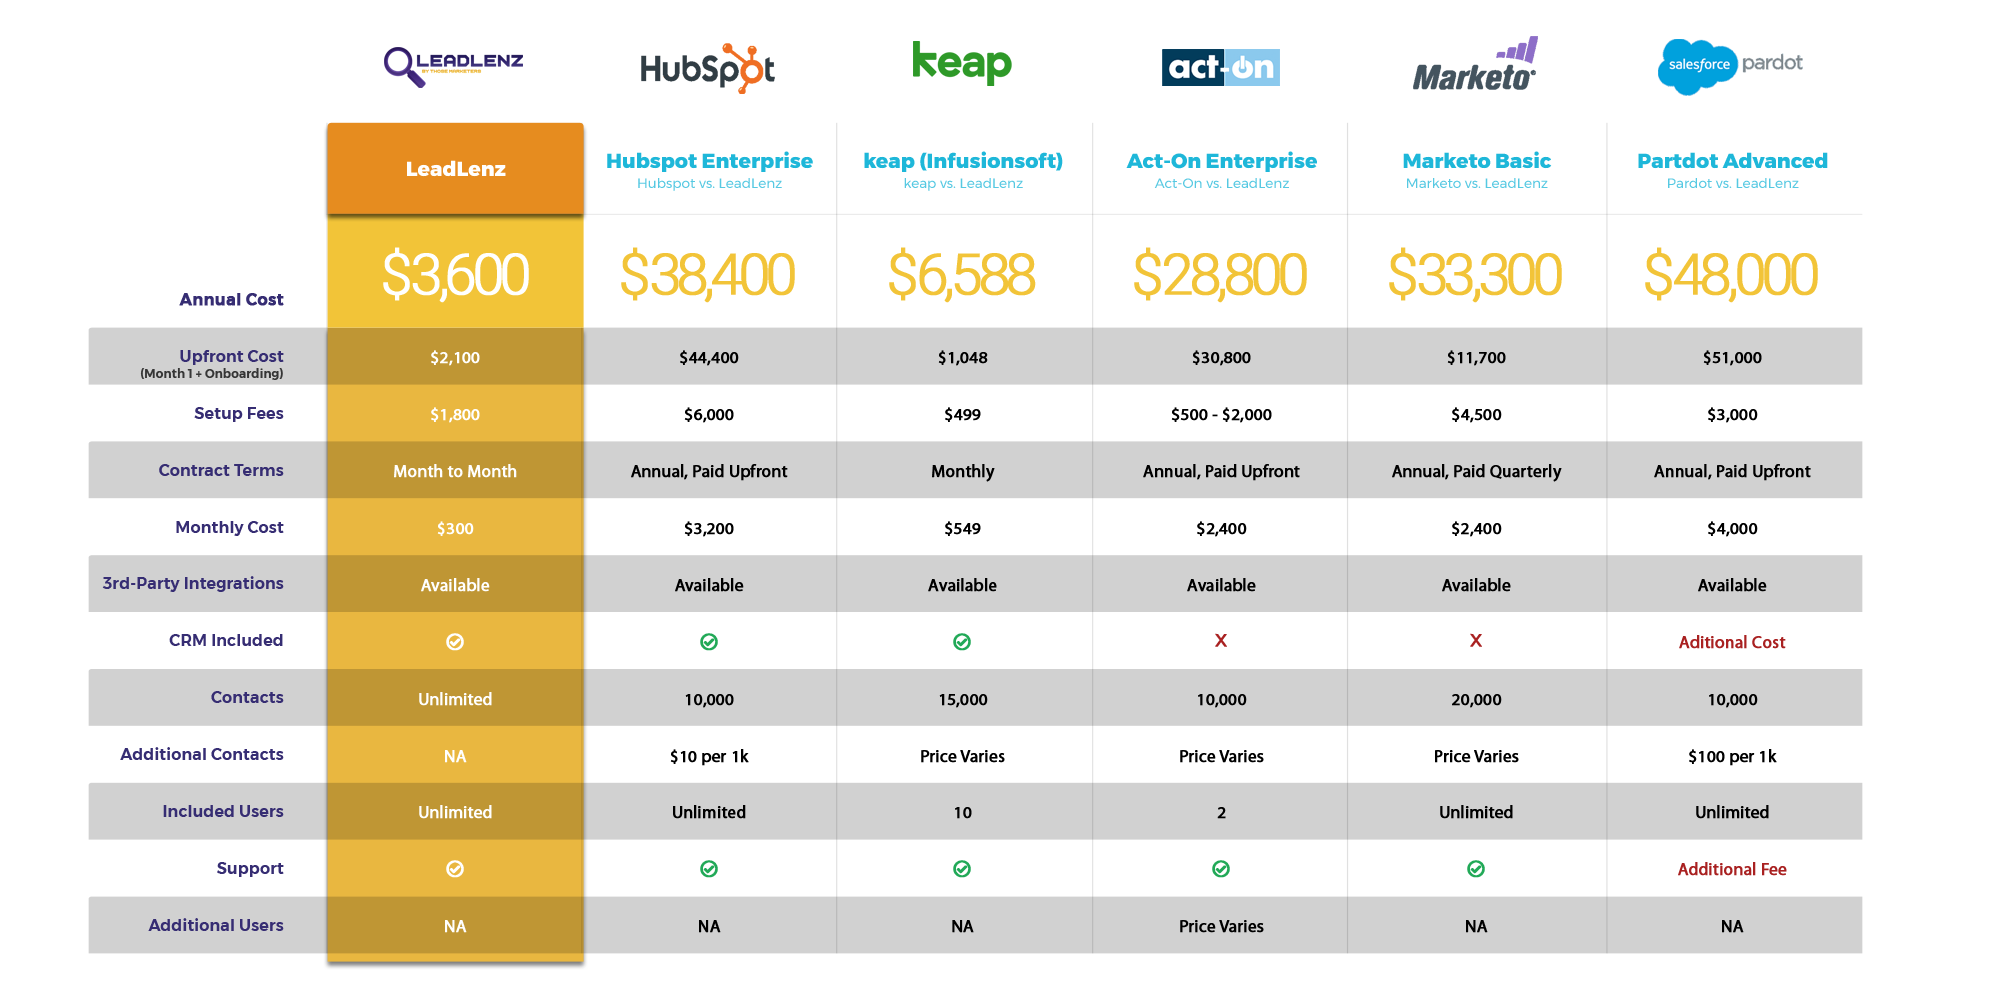 Marketing Automation Platform comparison chart